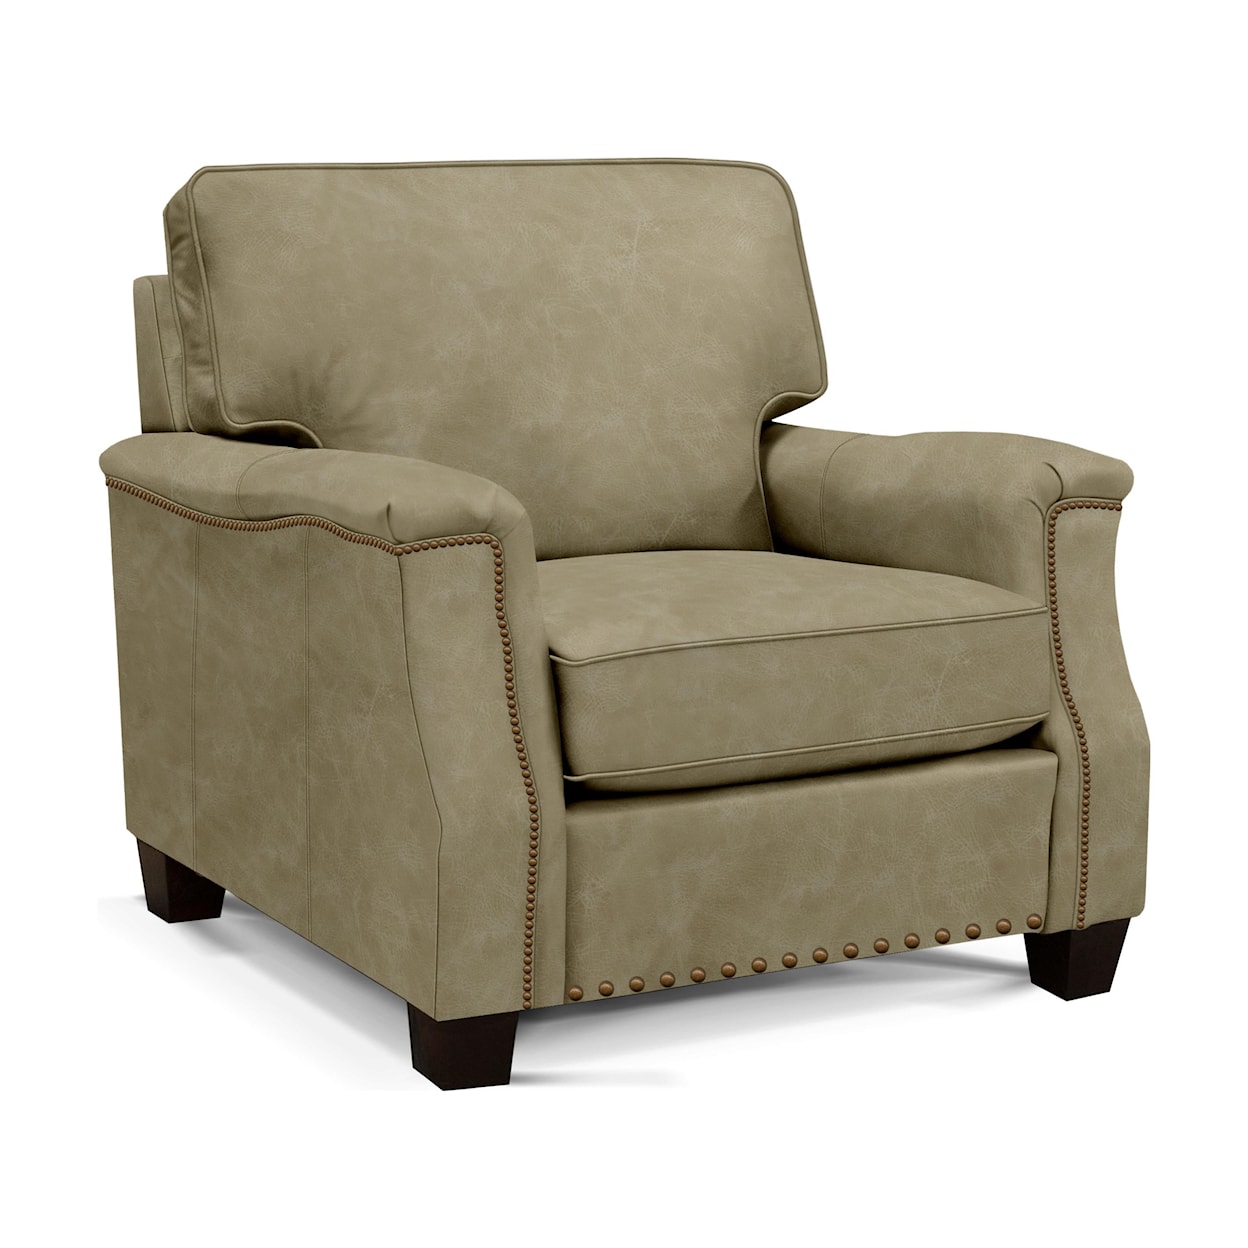 England 5300AL/N Series Leather Chair with Nailhead Trim